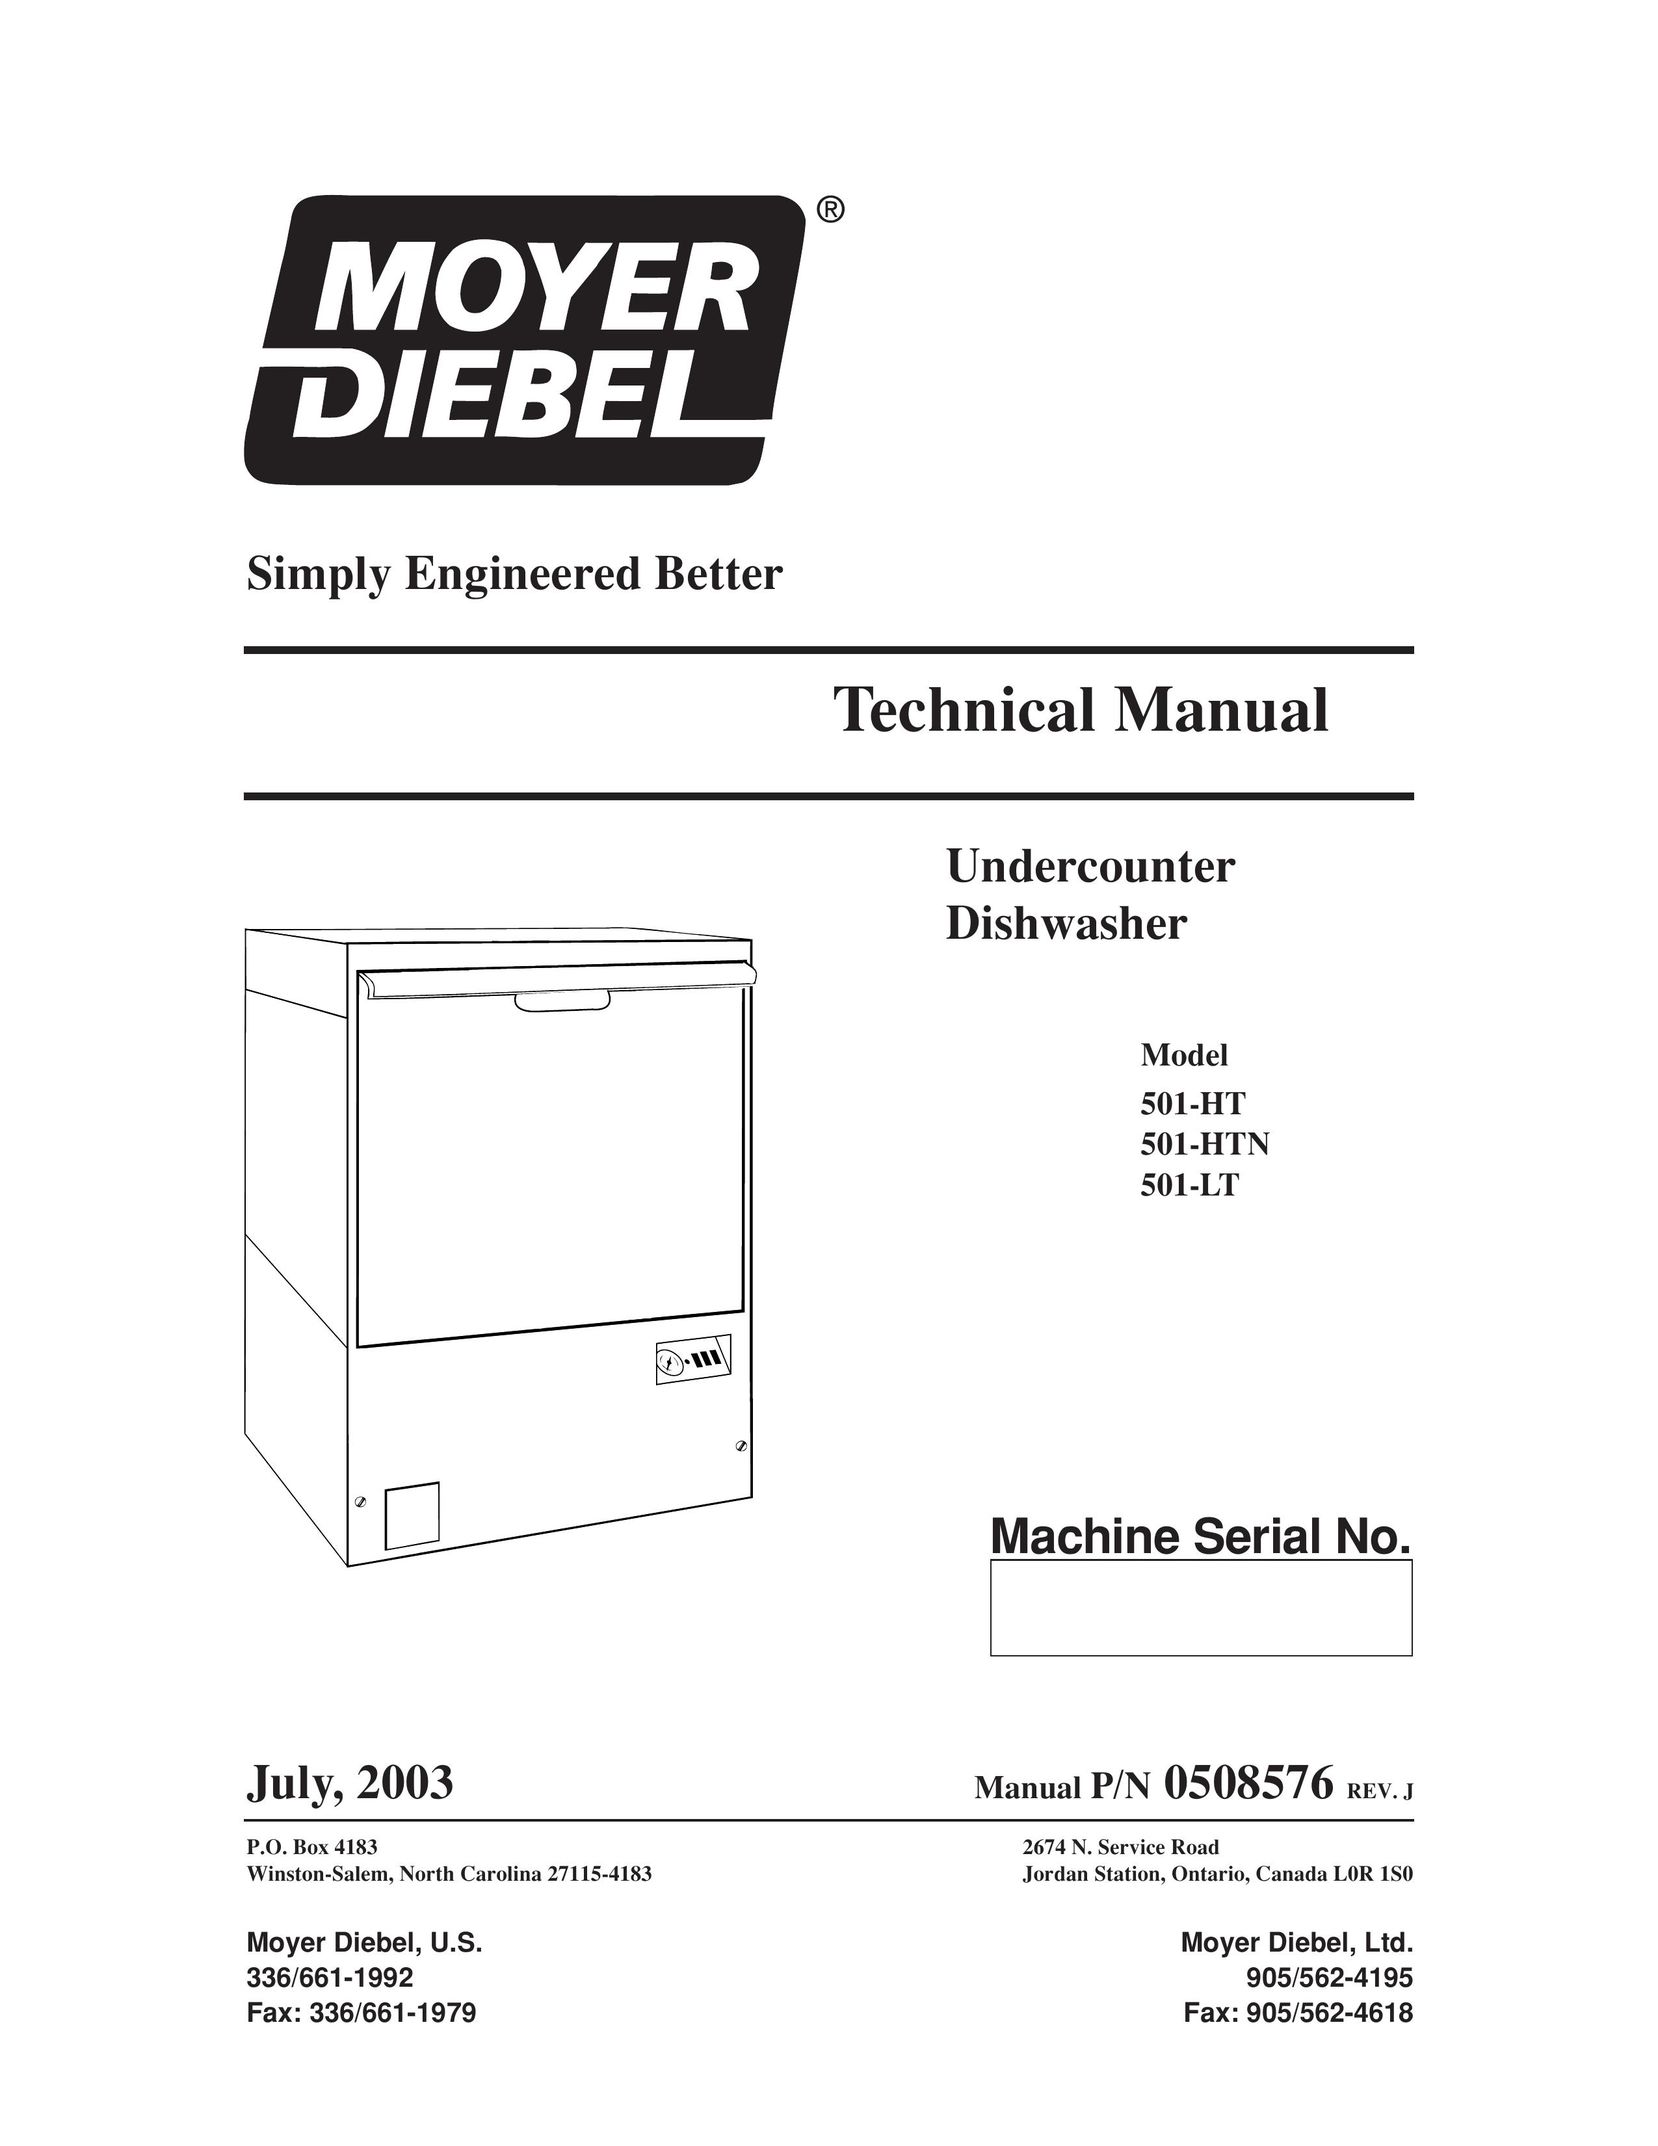 Moyer Diebel 501-HTN Dishwasher User Manual